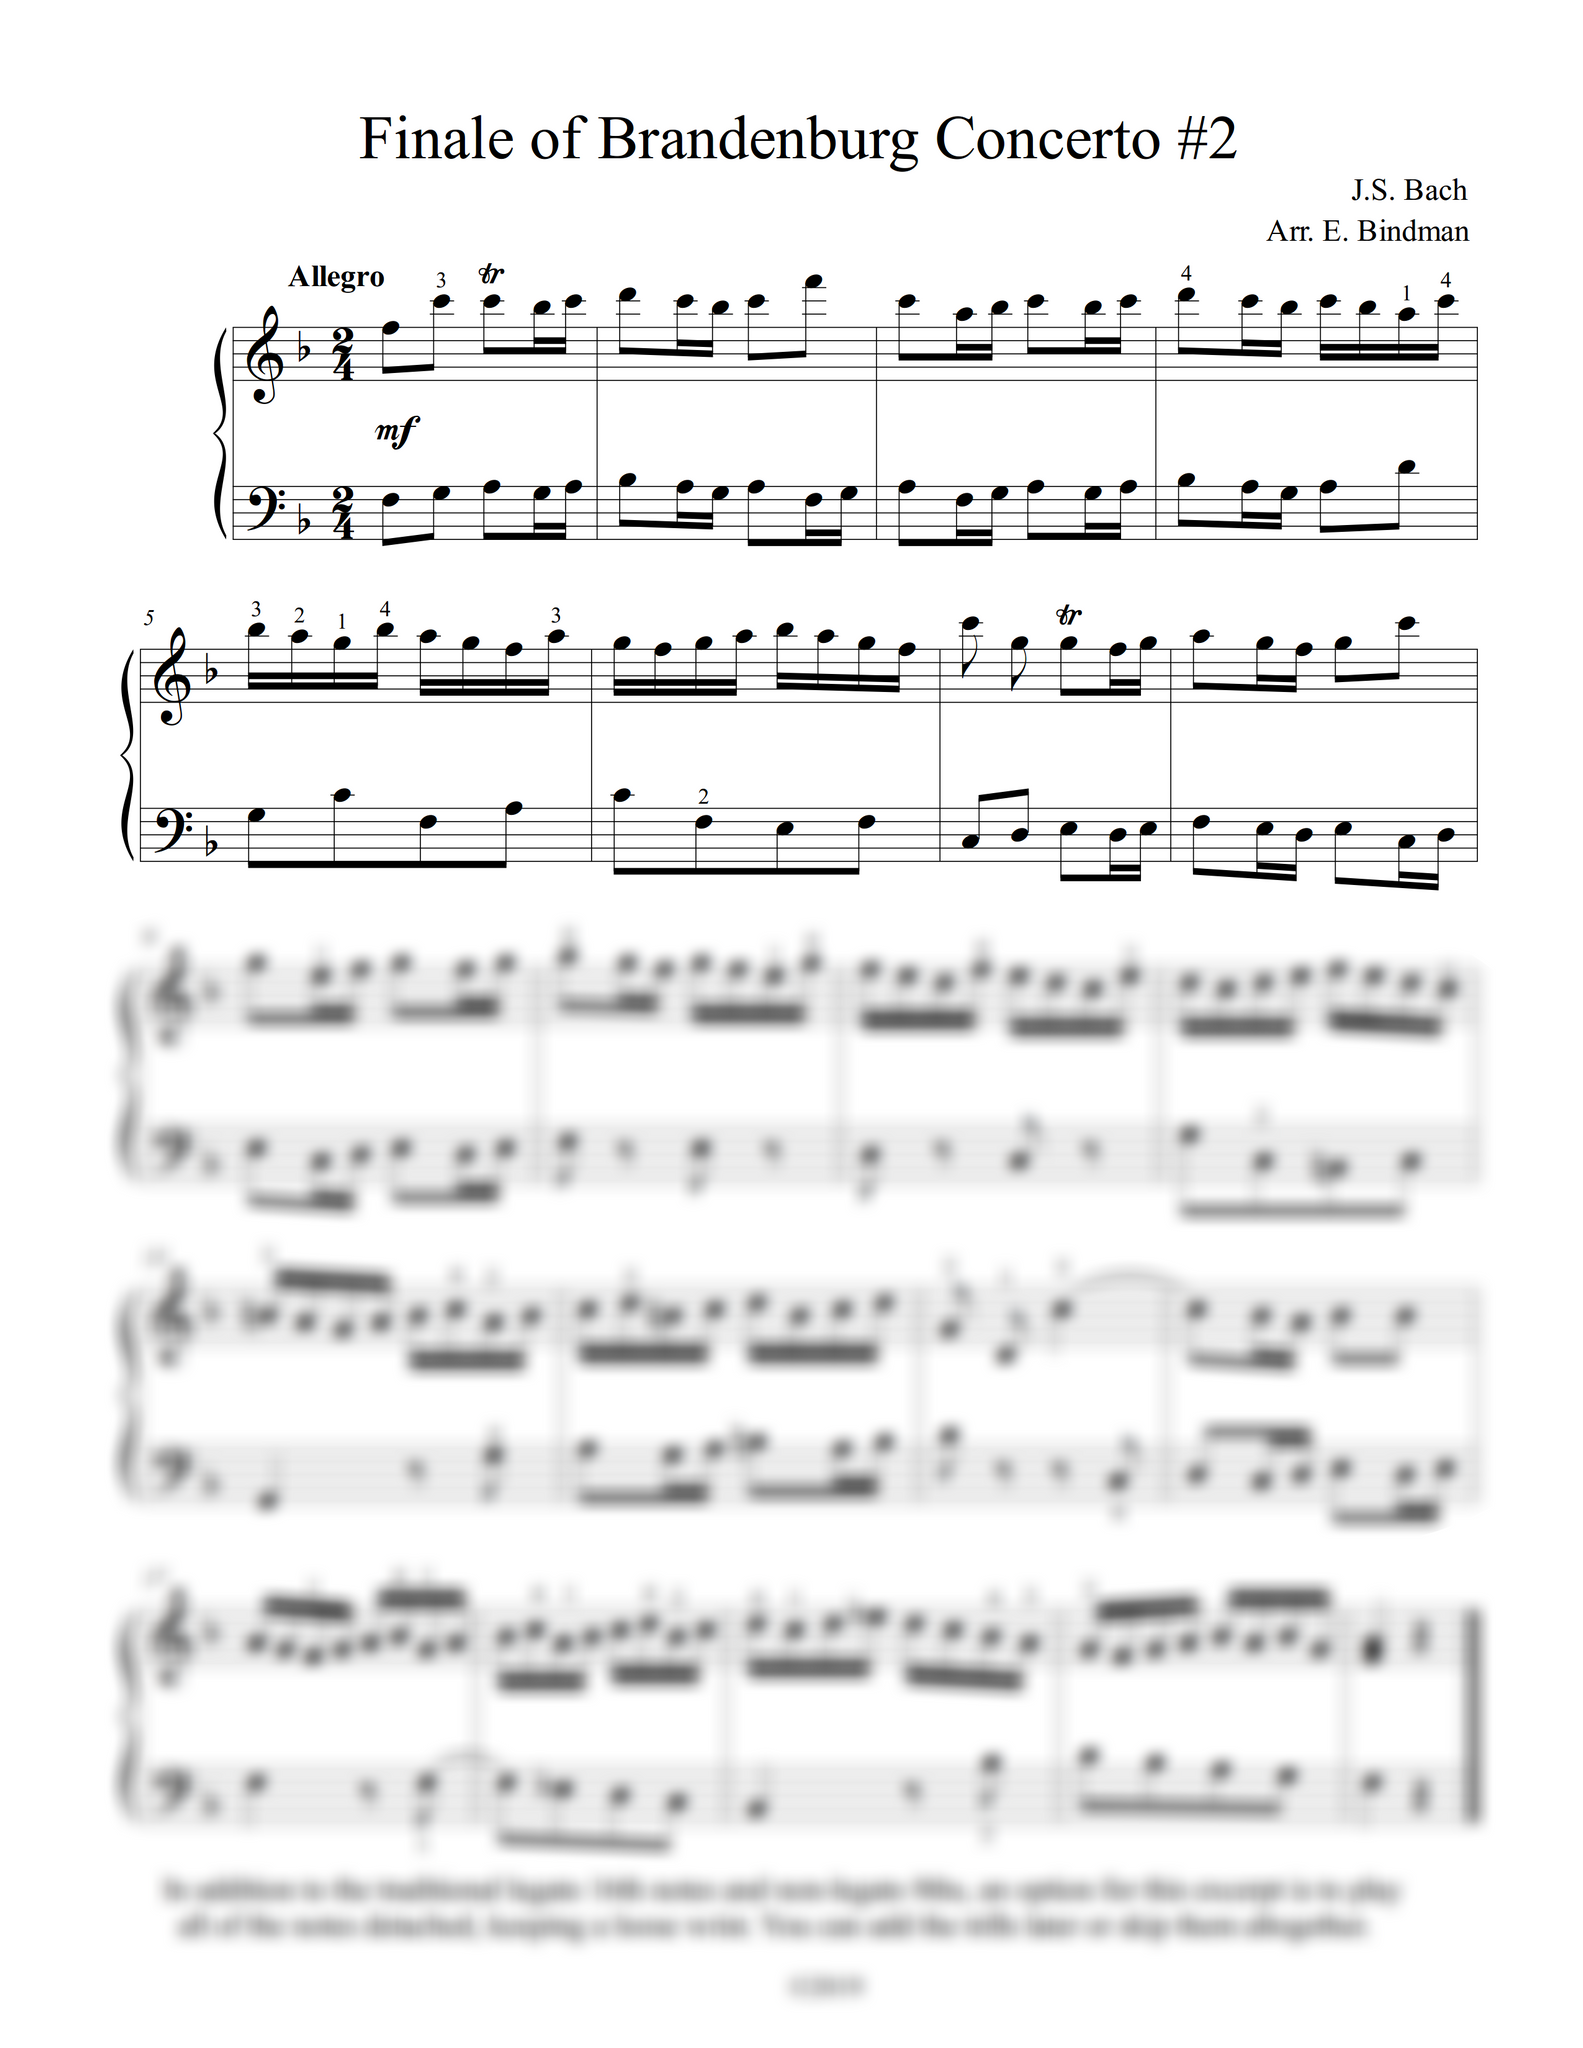 J.S. Bach: Finale of Brandenburg Concerto No. 2, BWV 1047 – arranged for piano by Eleonor Bindman